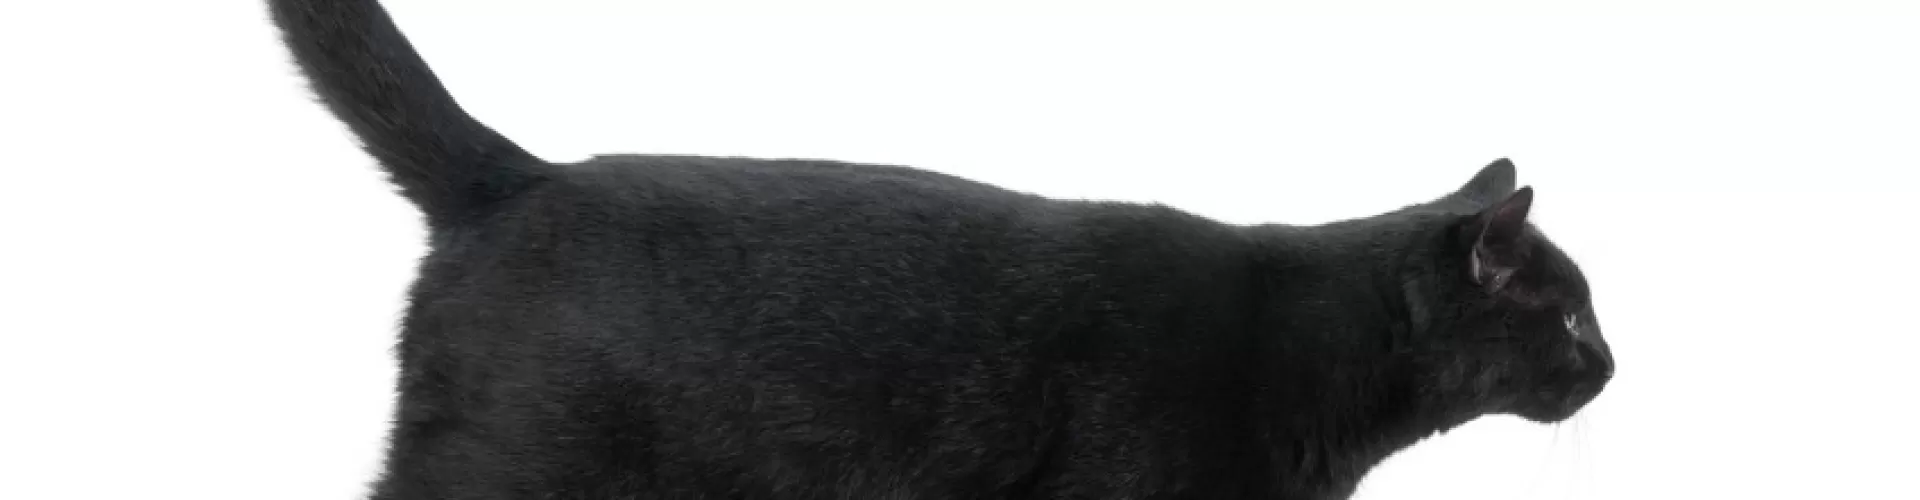 Side view of a black cat walking